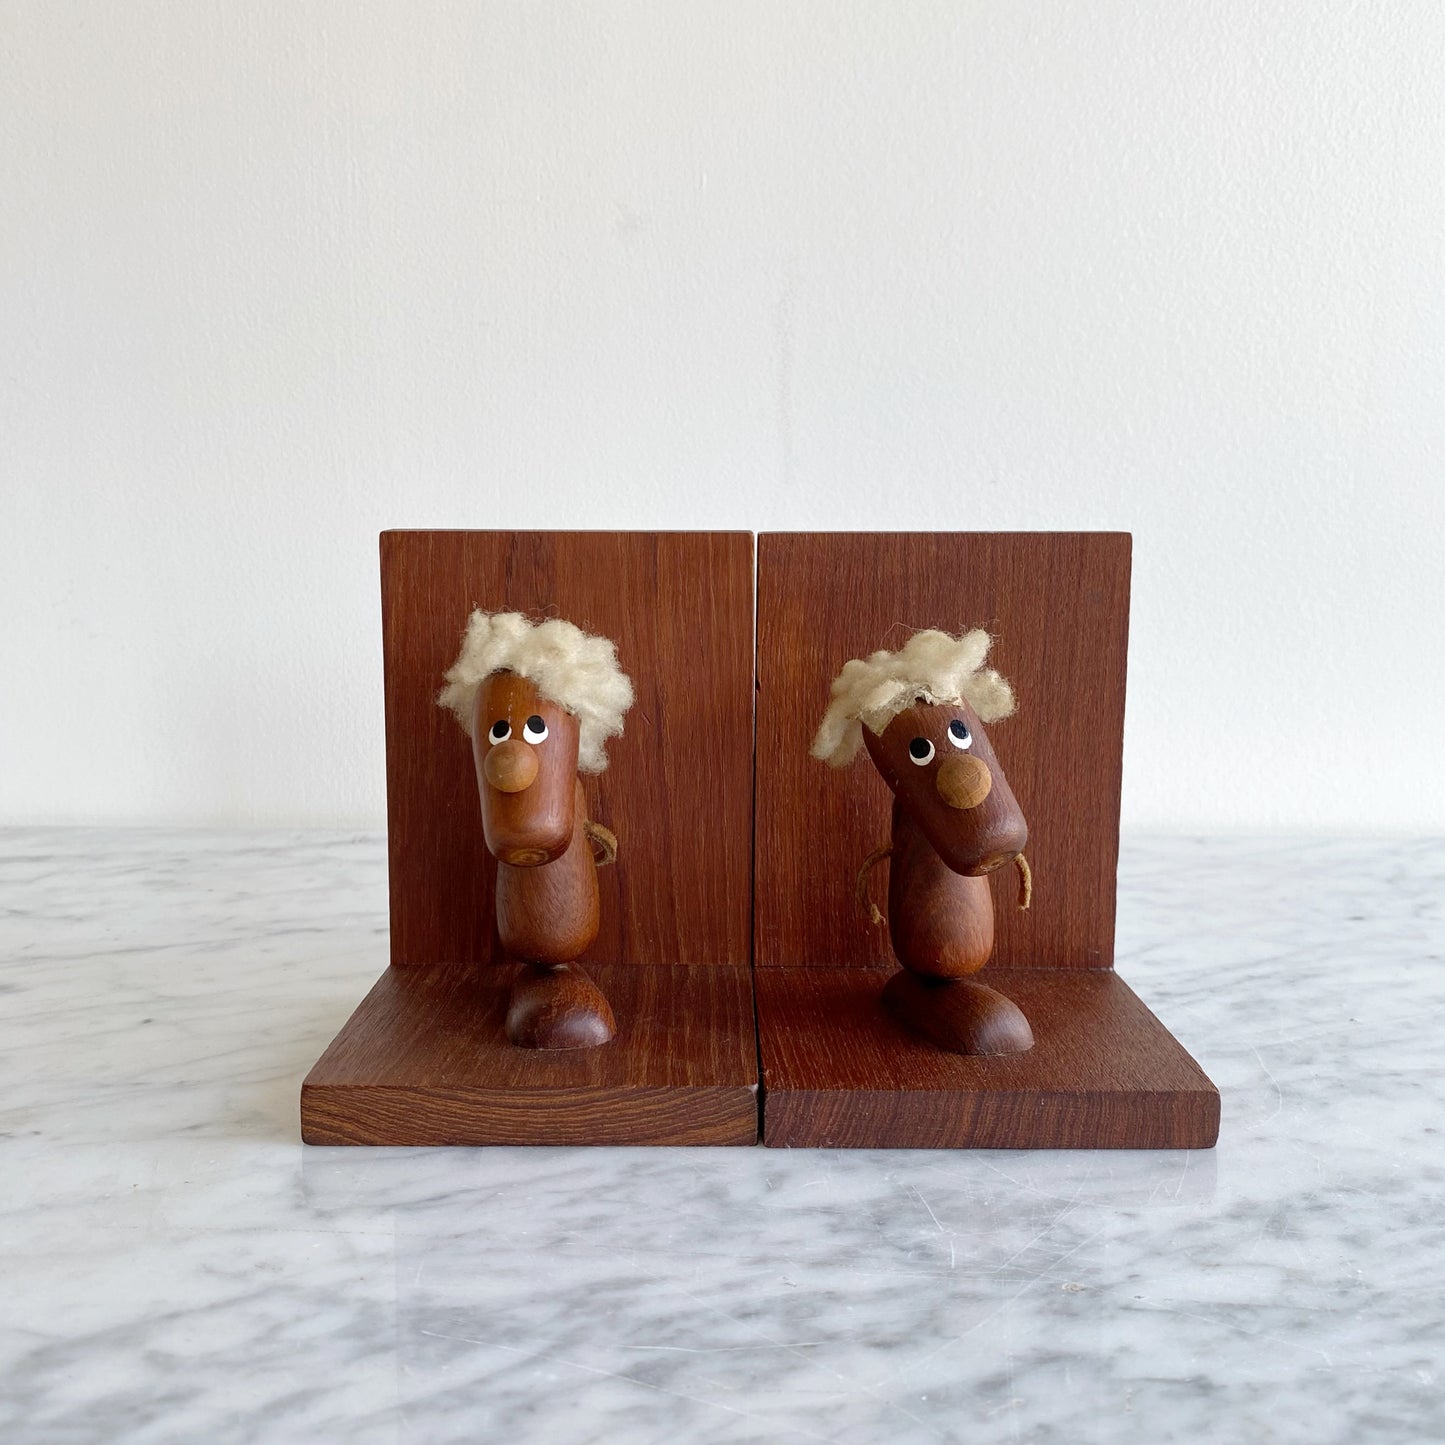 Pair of Vintage Danish Wood Figures Bookends